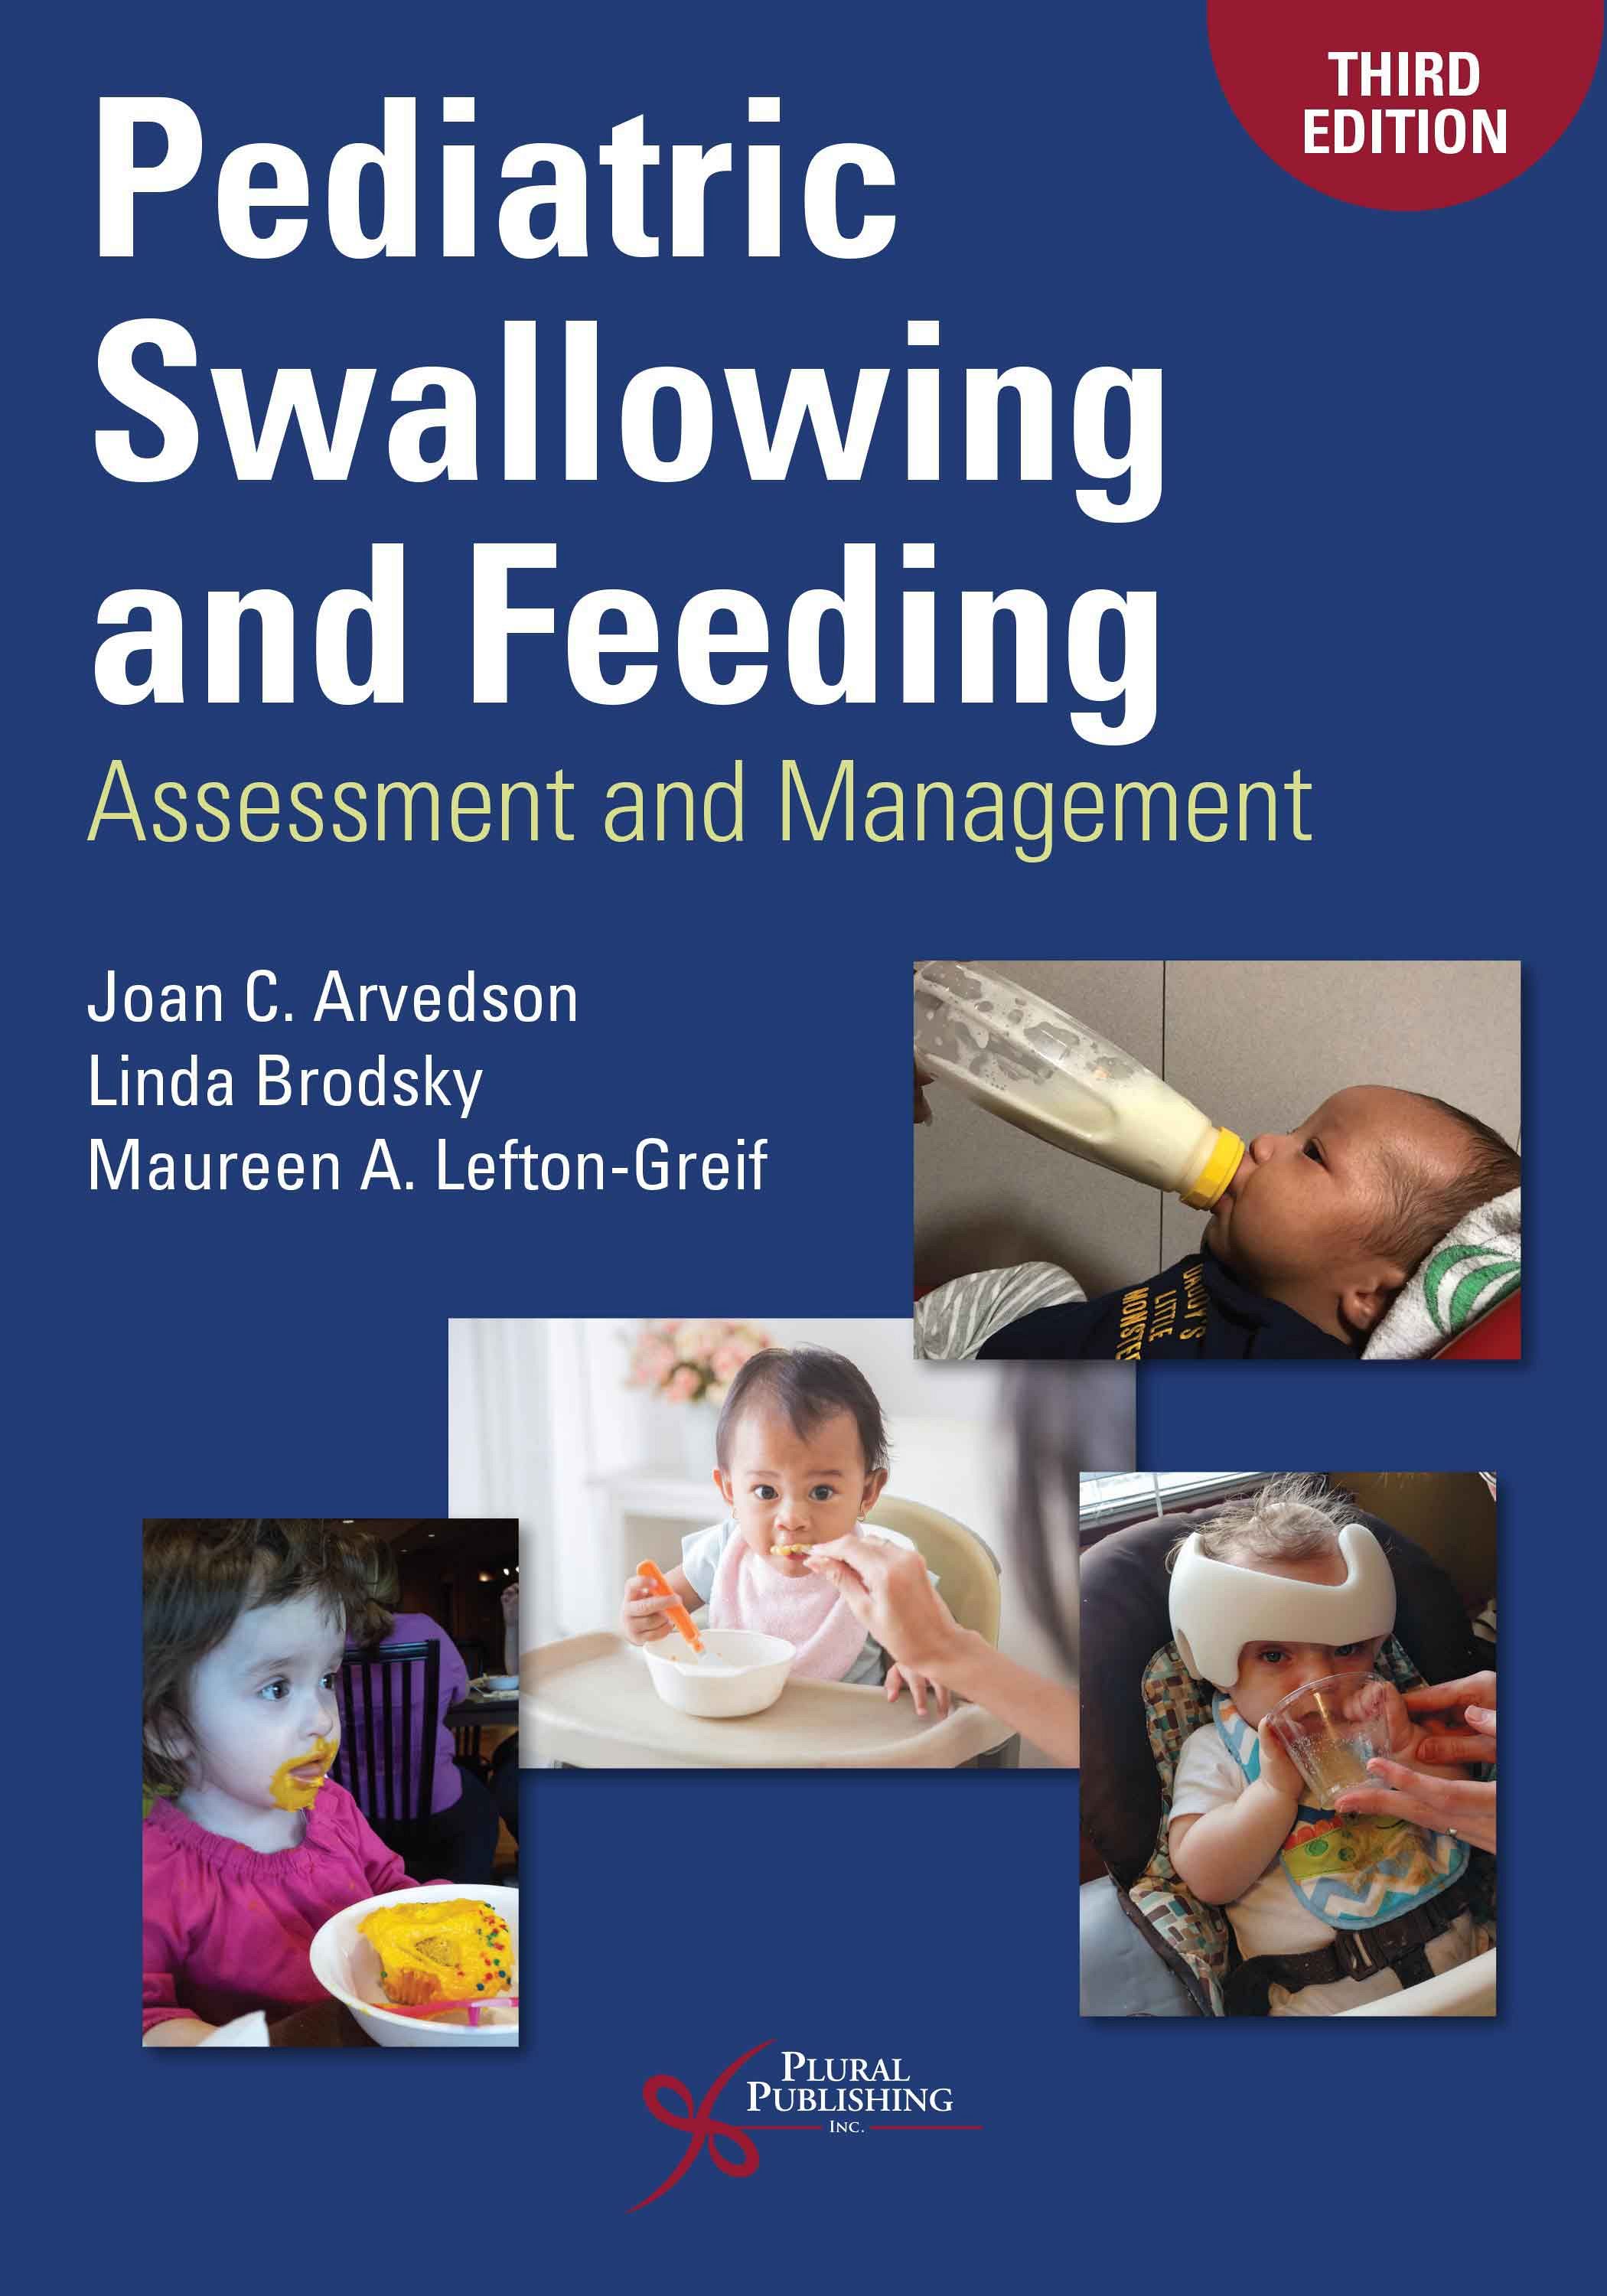 Pediatric Swallowing and Feeding